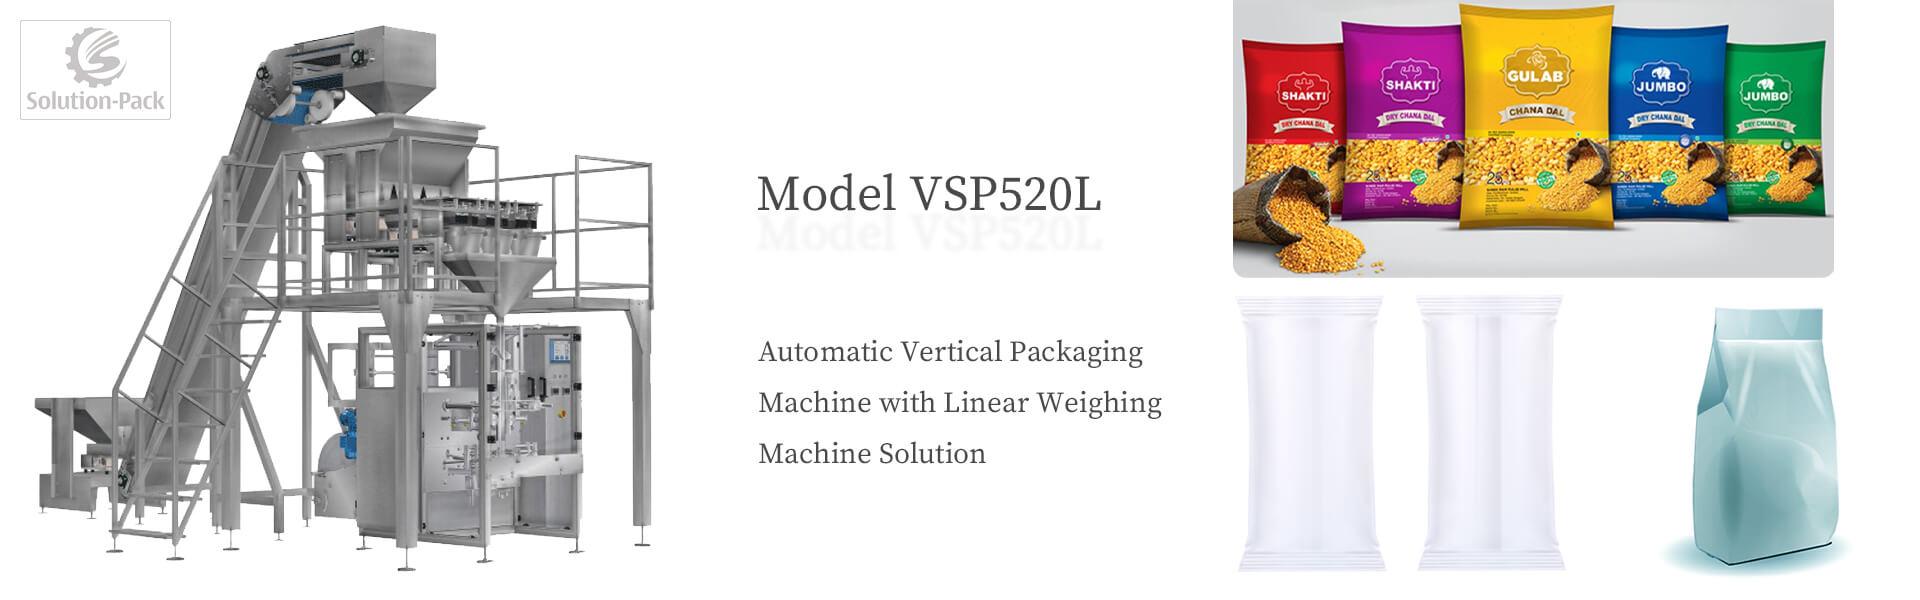 Solution-Pack | VSP520L Vertical Form Fill Seal Machine / Head Banner